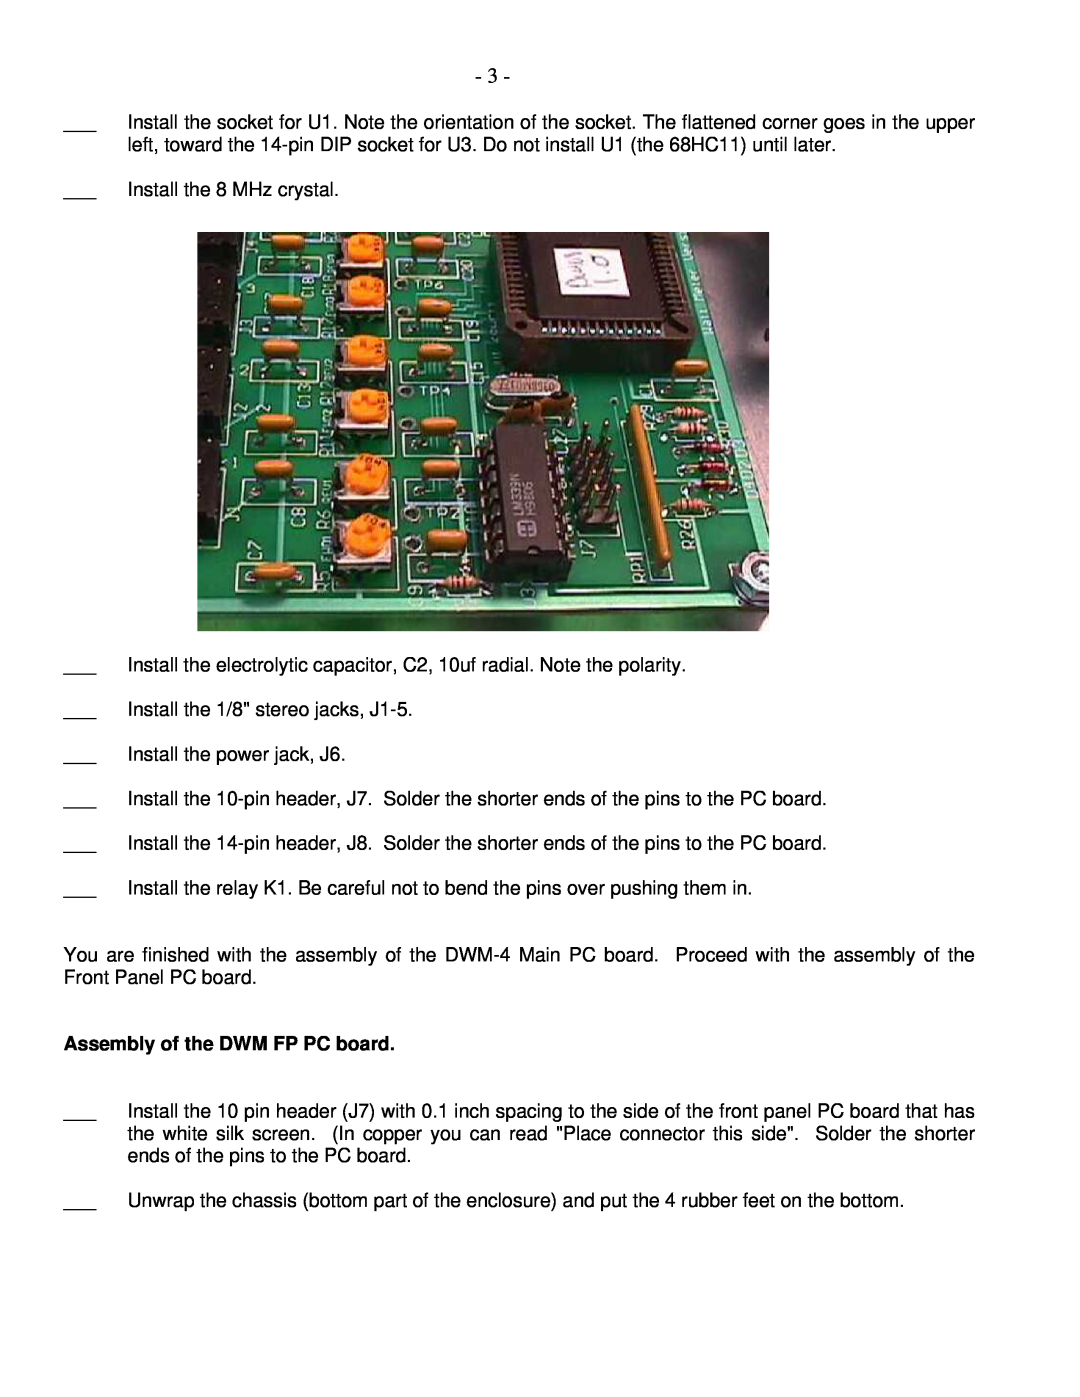 Macsense Connectivity DWM-4 manual Assembly of the DWM FP PC board 